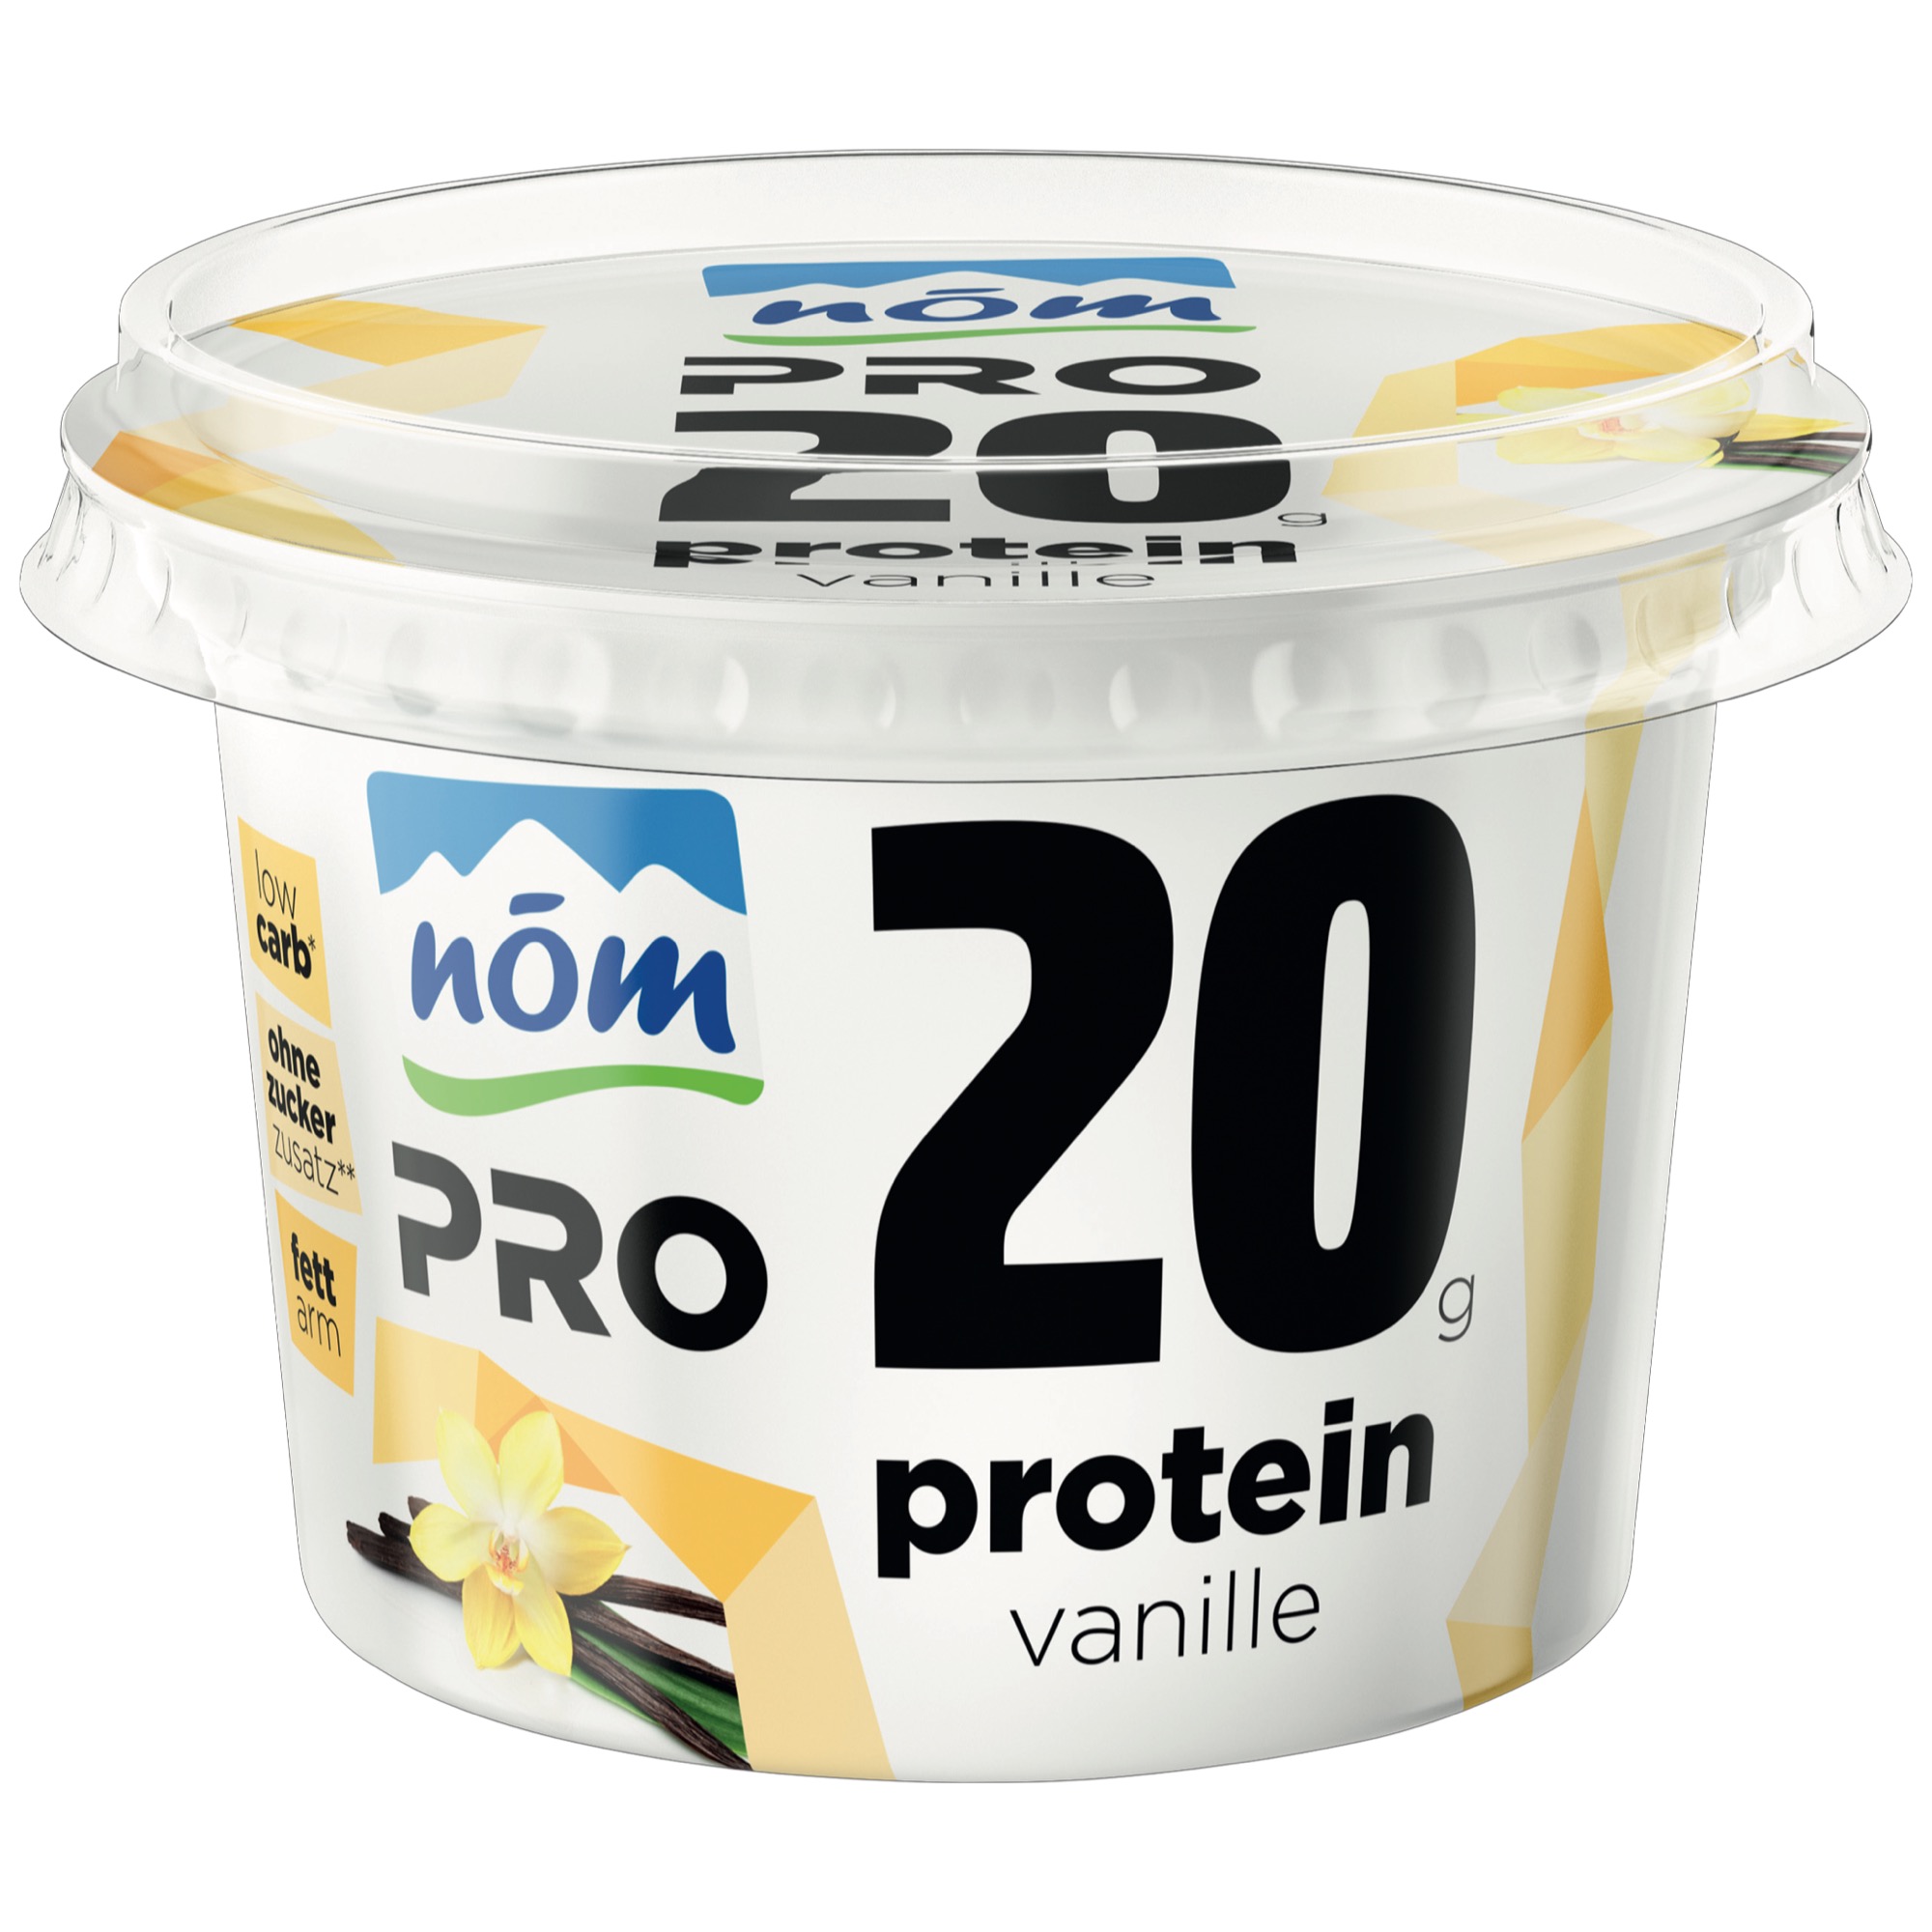 Nöm PRO Proteintopfencr. 235g, Vanille